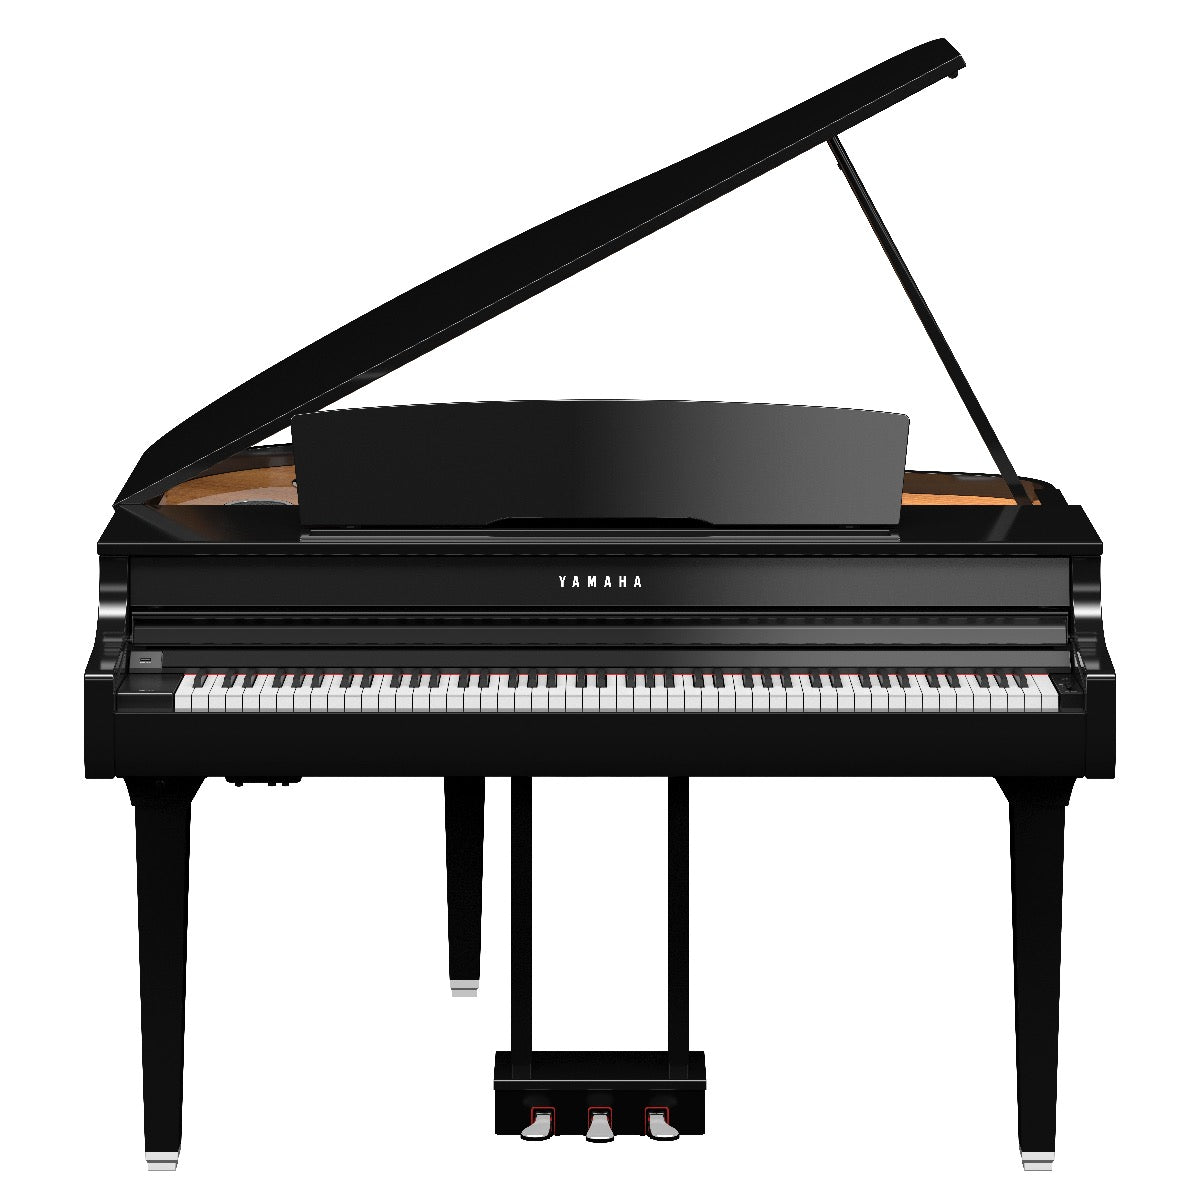 Yamaha Clavinova CSP295GP Digital Grand Piano with Bench - Polished Ebony, View 3